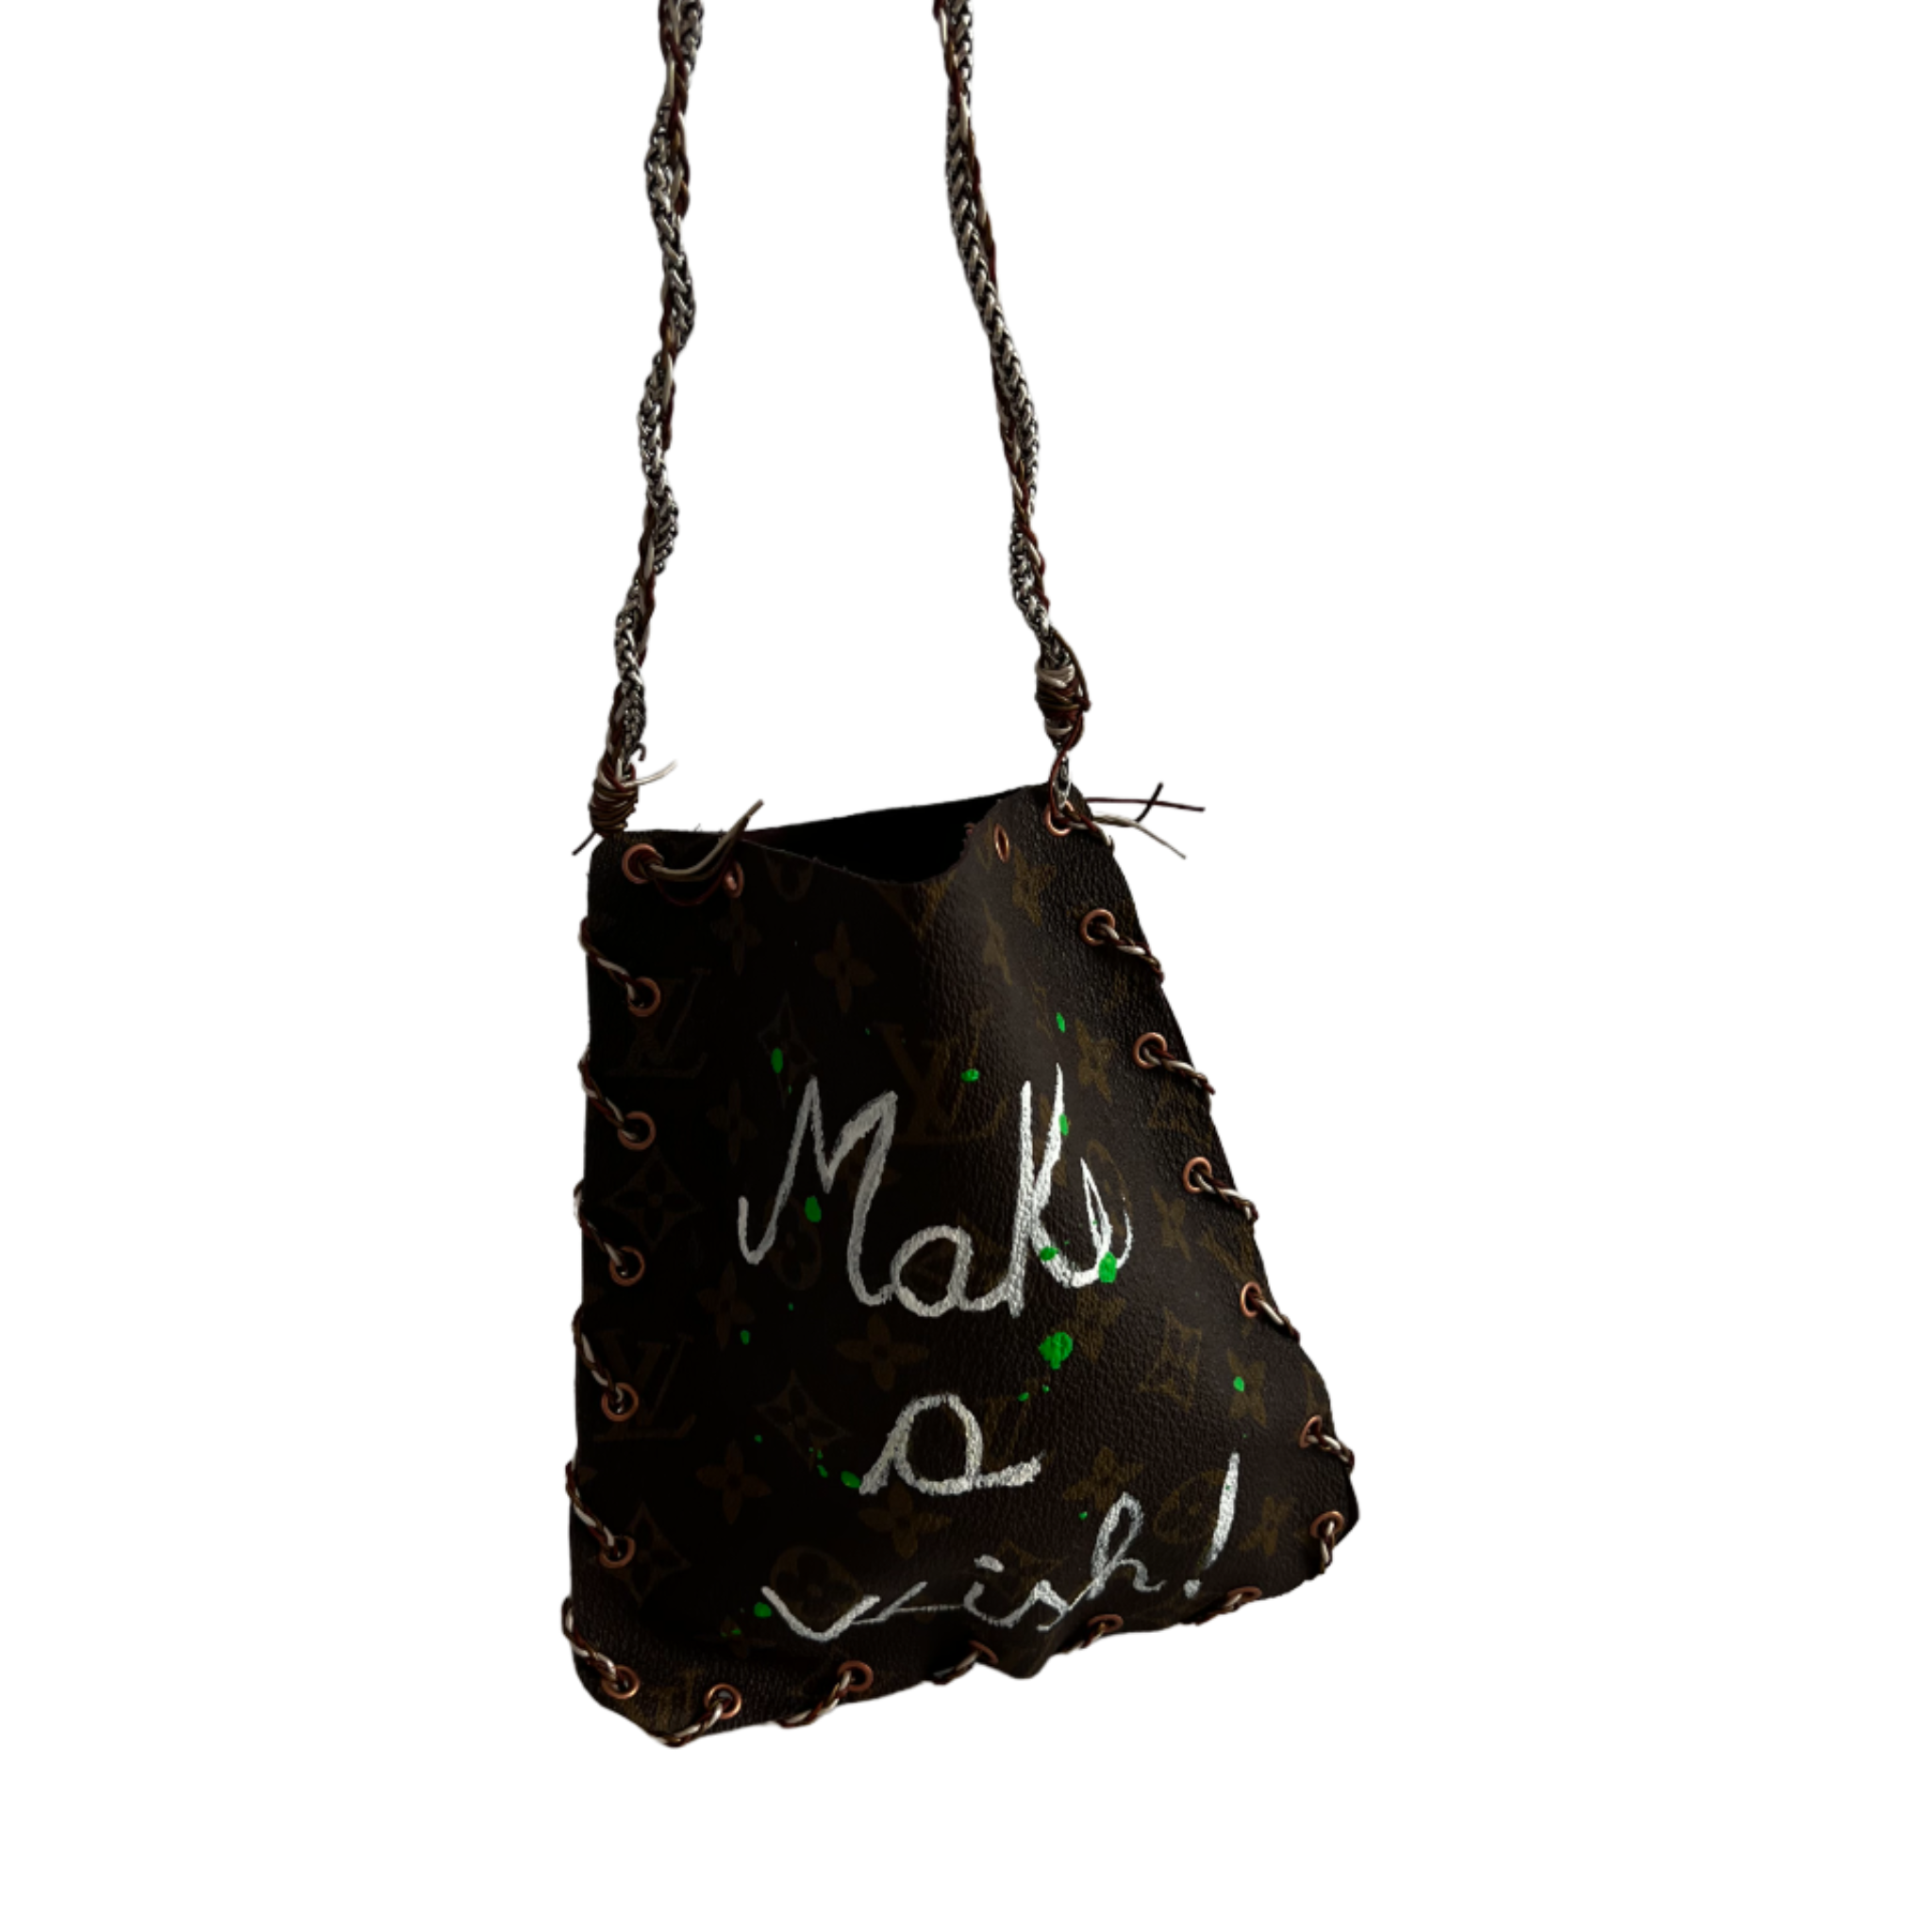 Make A Wish Hand-Painted LV Bag